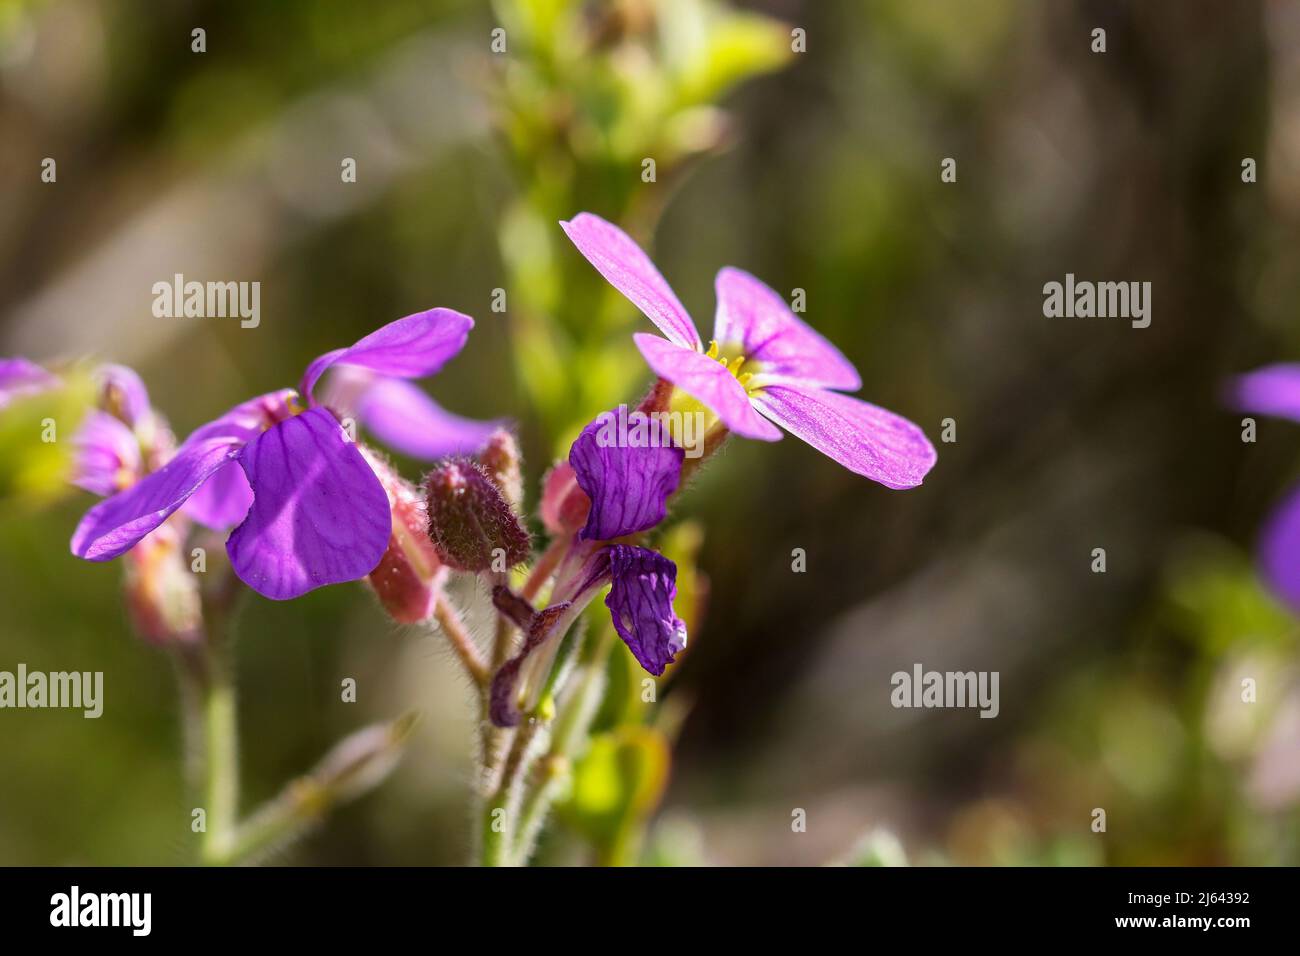 Purple pink violet flower macro closeup. Sunlight or light rays on wildflower petals. Bokeh background. Dublin, Ireland Stock Photo